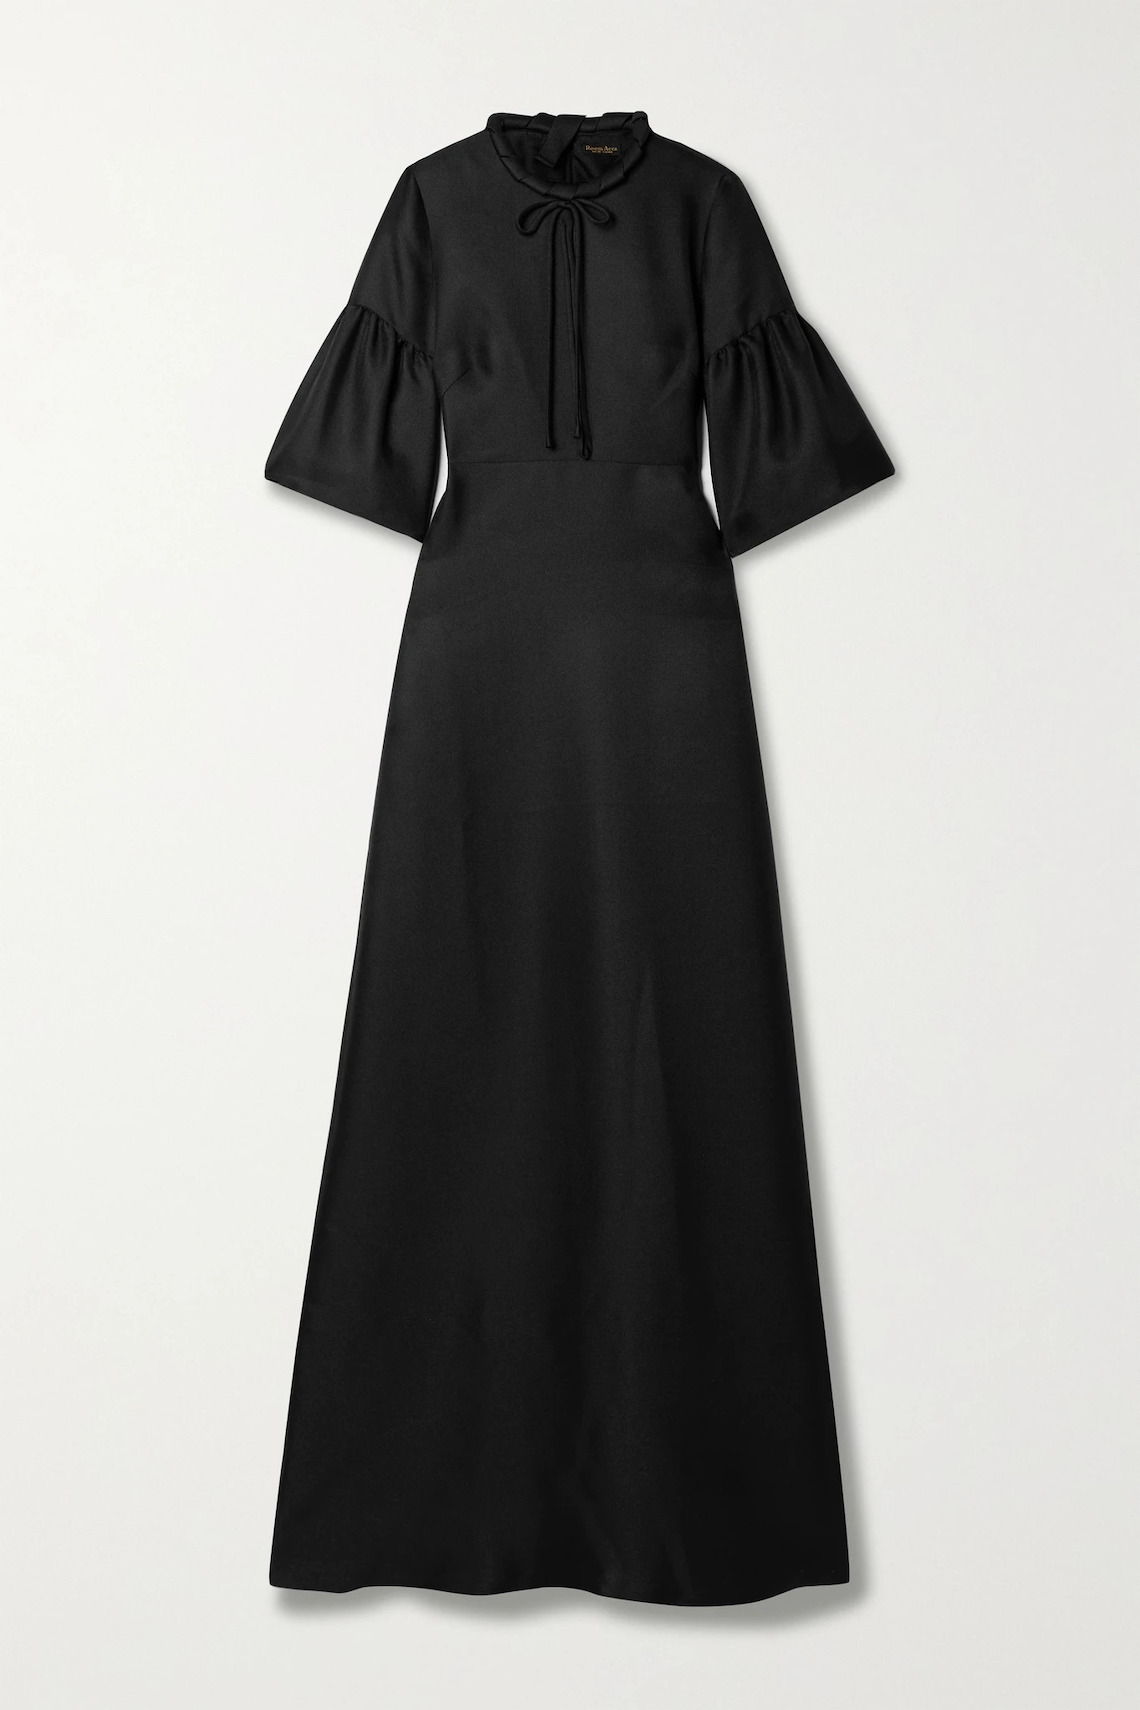 30 Black Wedding Dresses We Love for the Alternative Bride